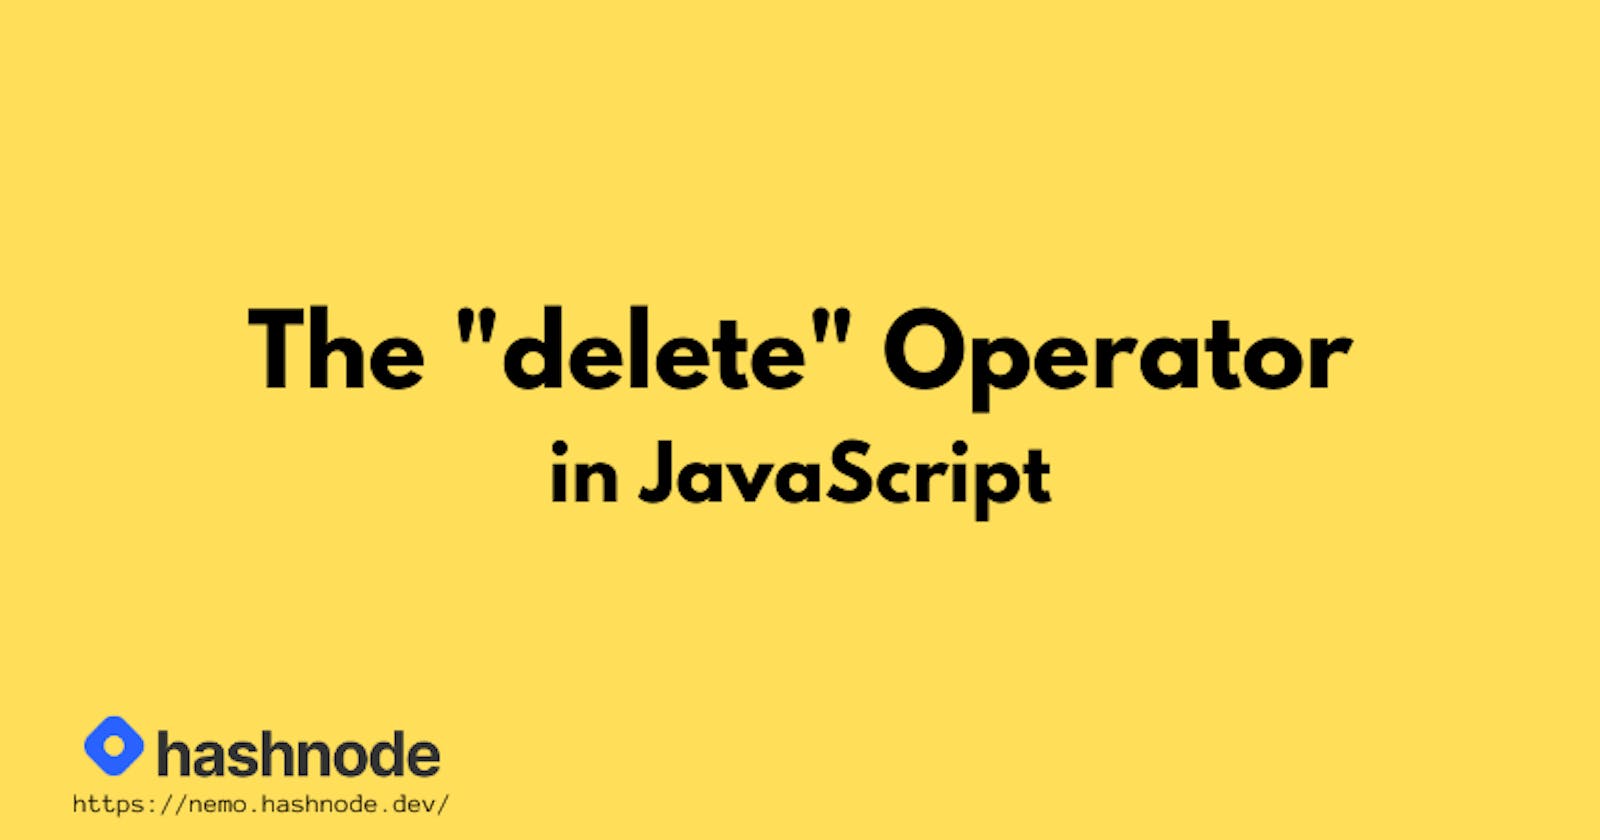 The "delete" in JavaScript